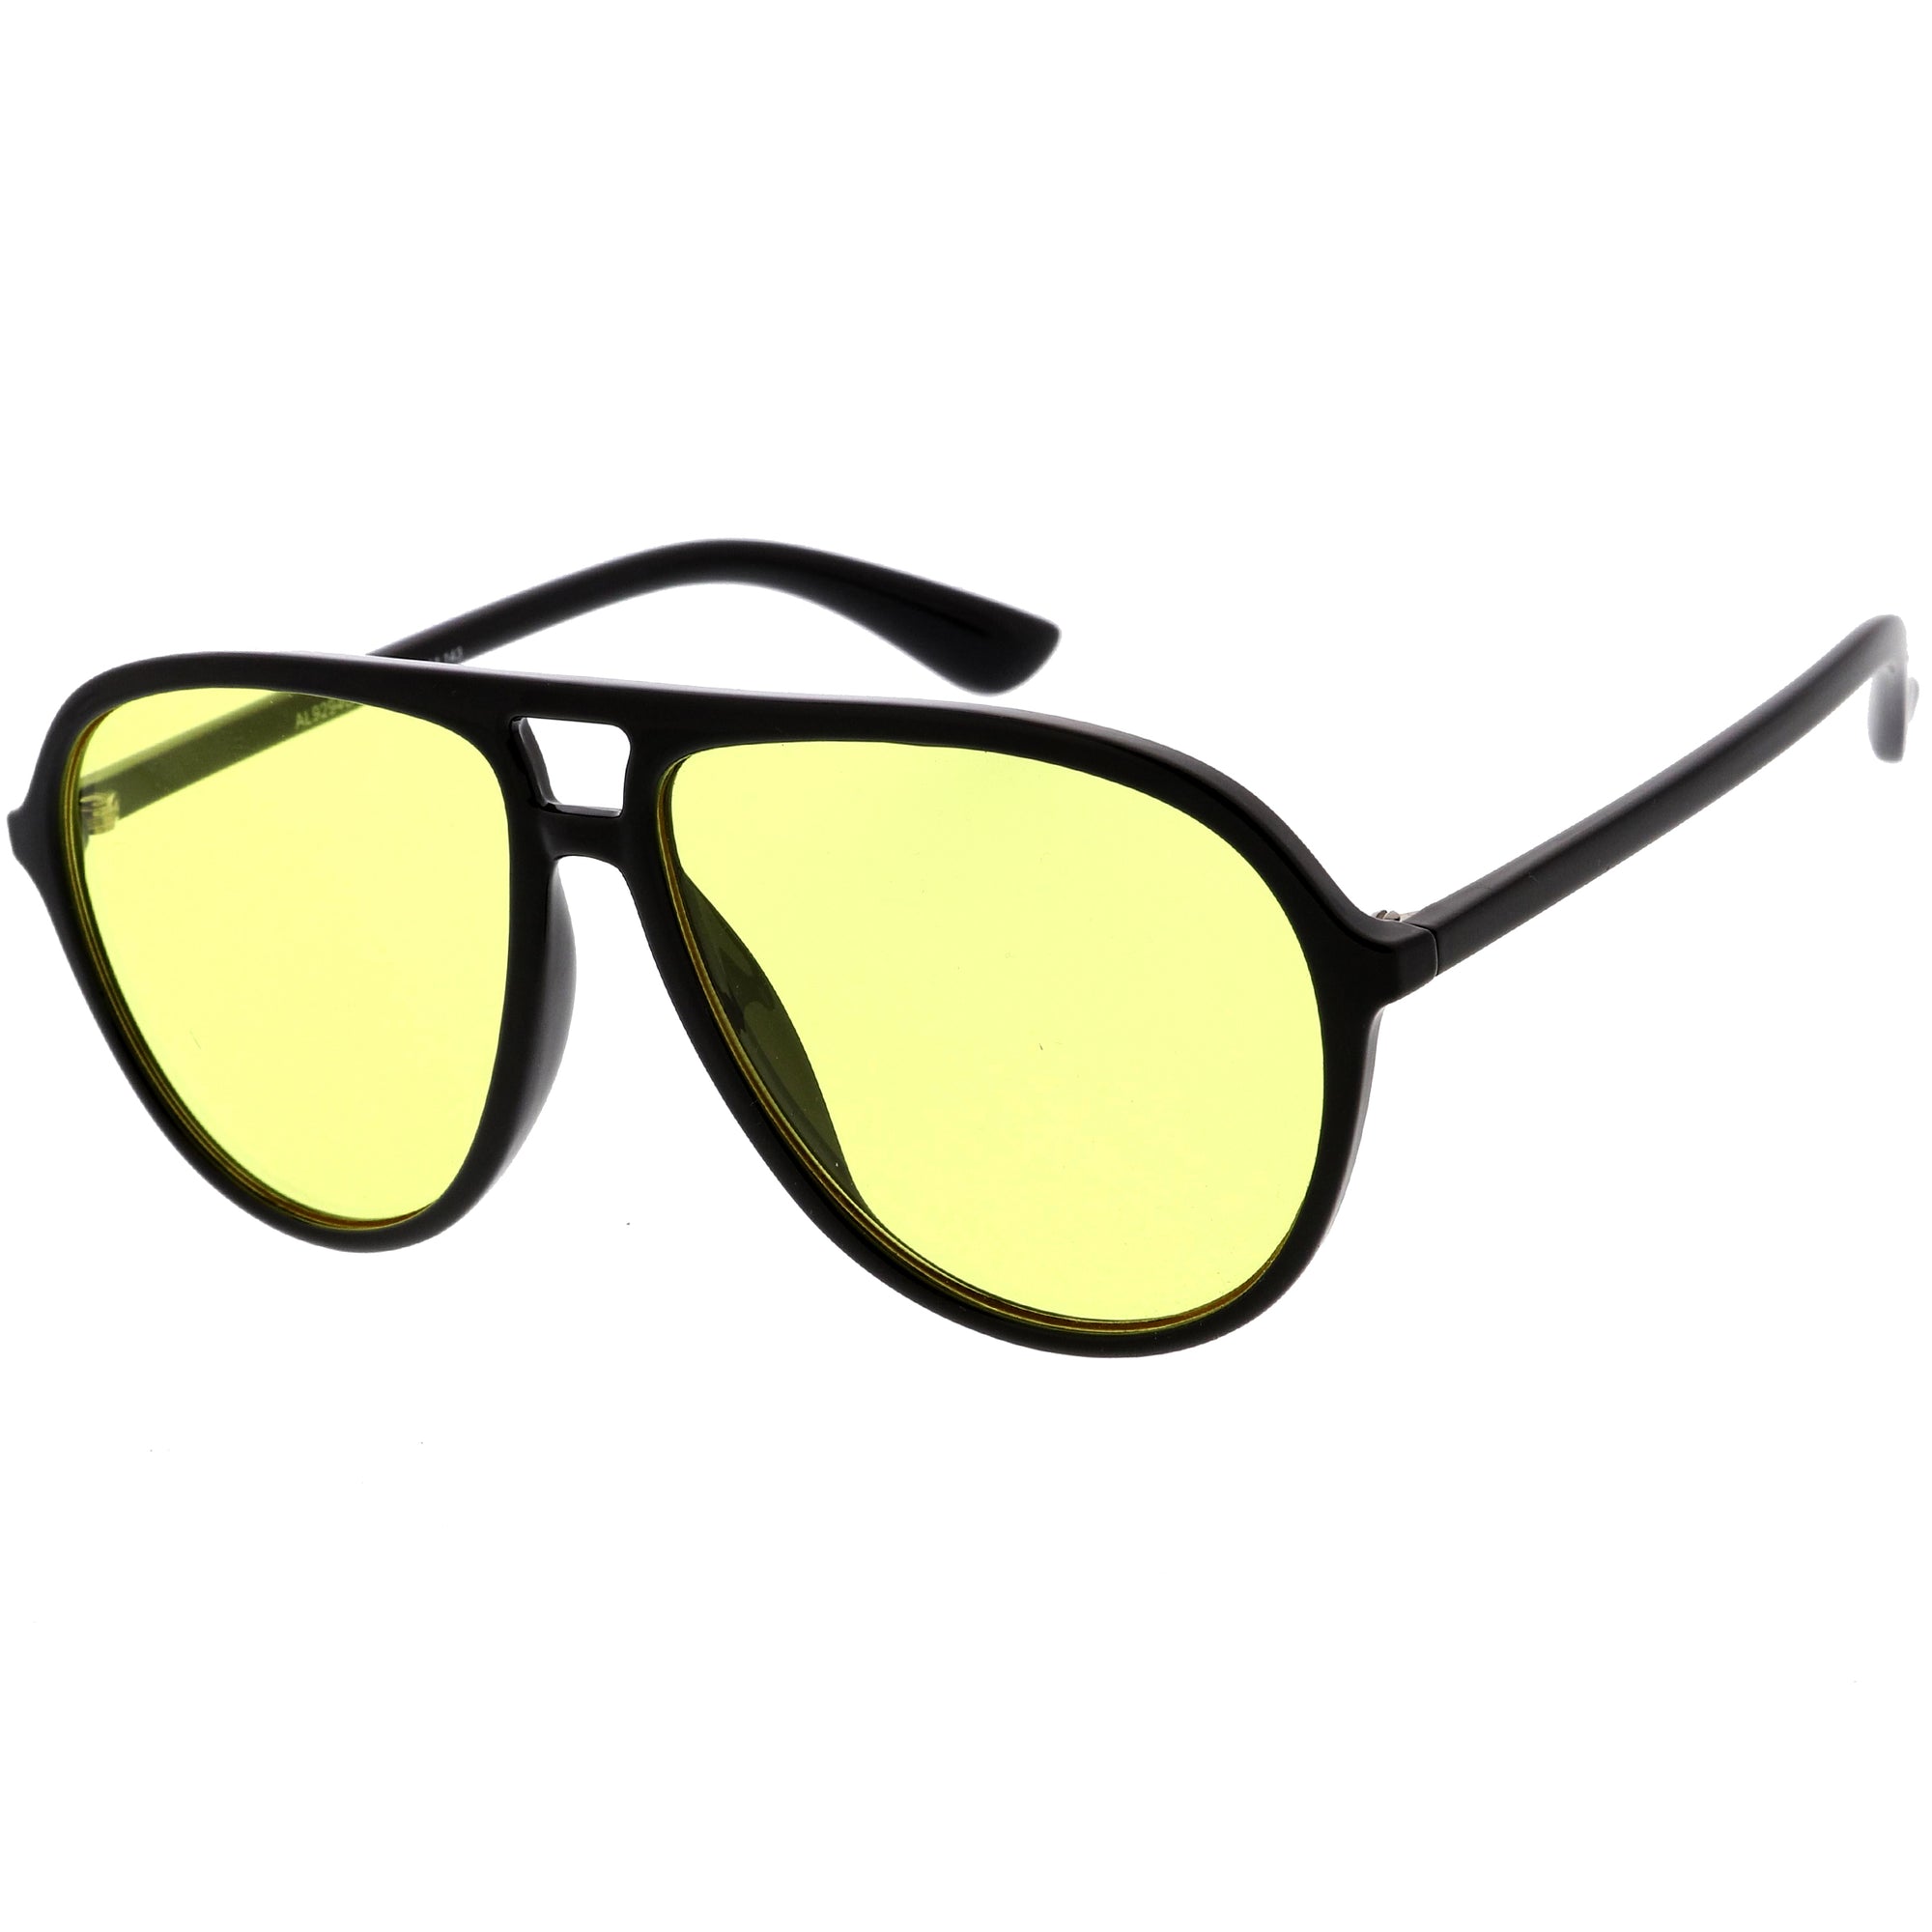 1980's Retro Fashion Blue Blocker Lens Aviator Sunglasses 8588